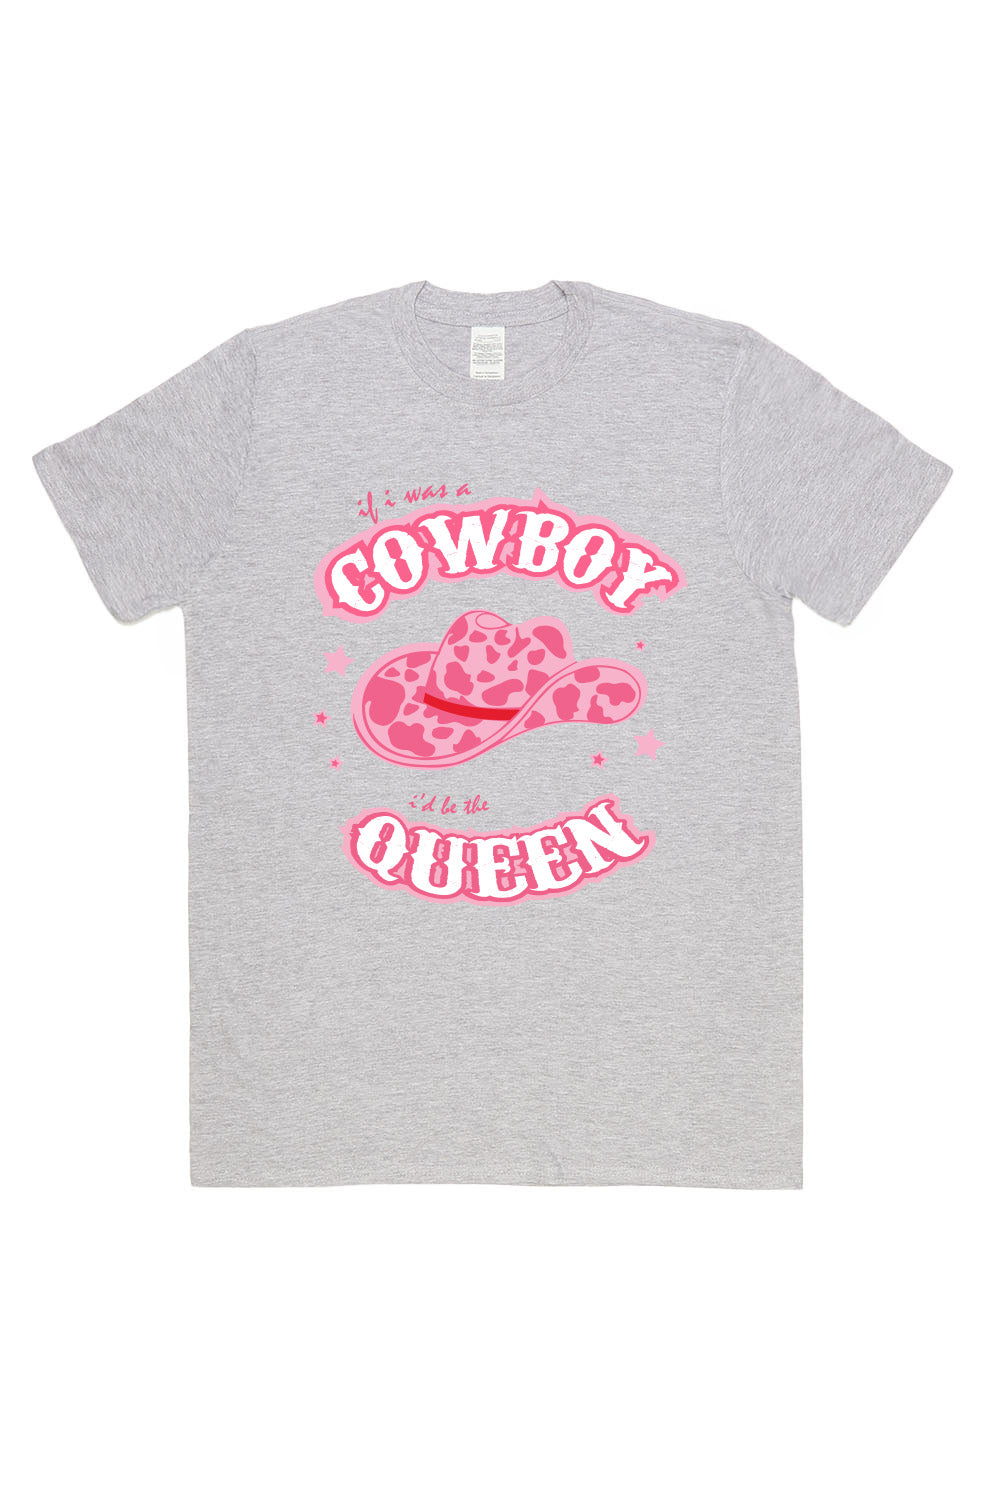 Cowboy Queen T-Shirt in Ash Grey (Custom Packs)